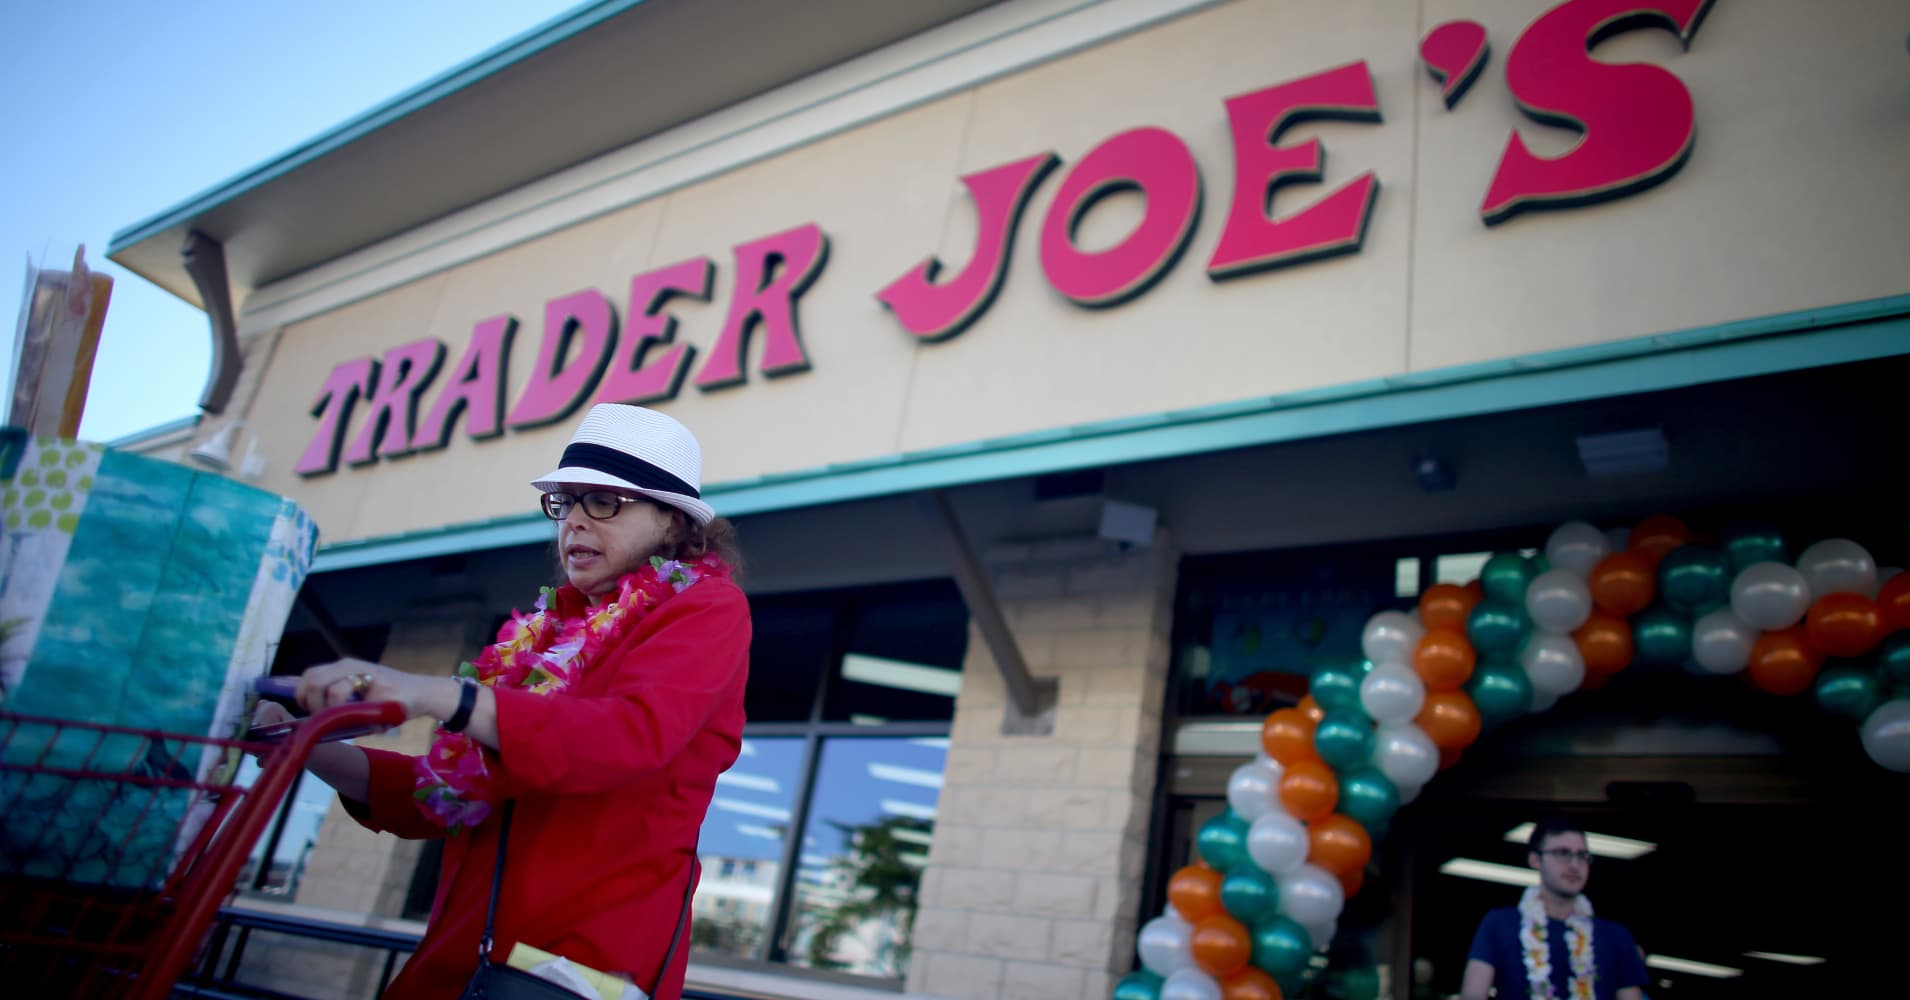 Trader Joe s Dethroned As America s Favorite Grocery Store